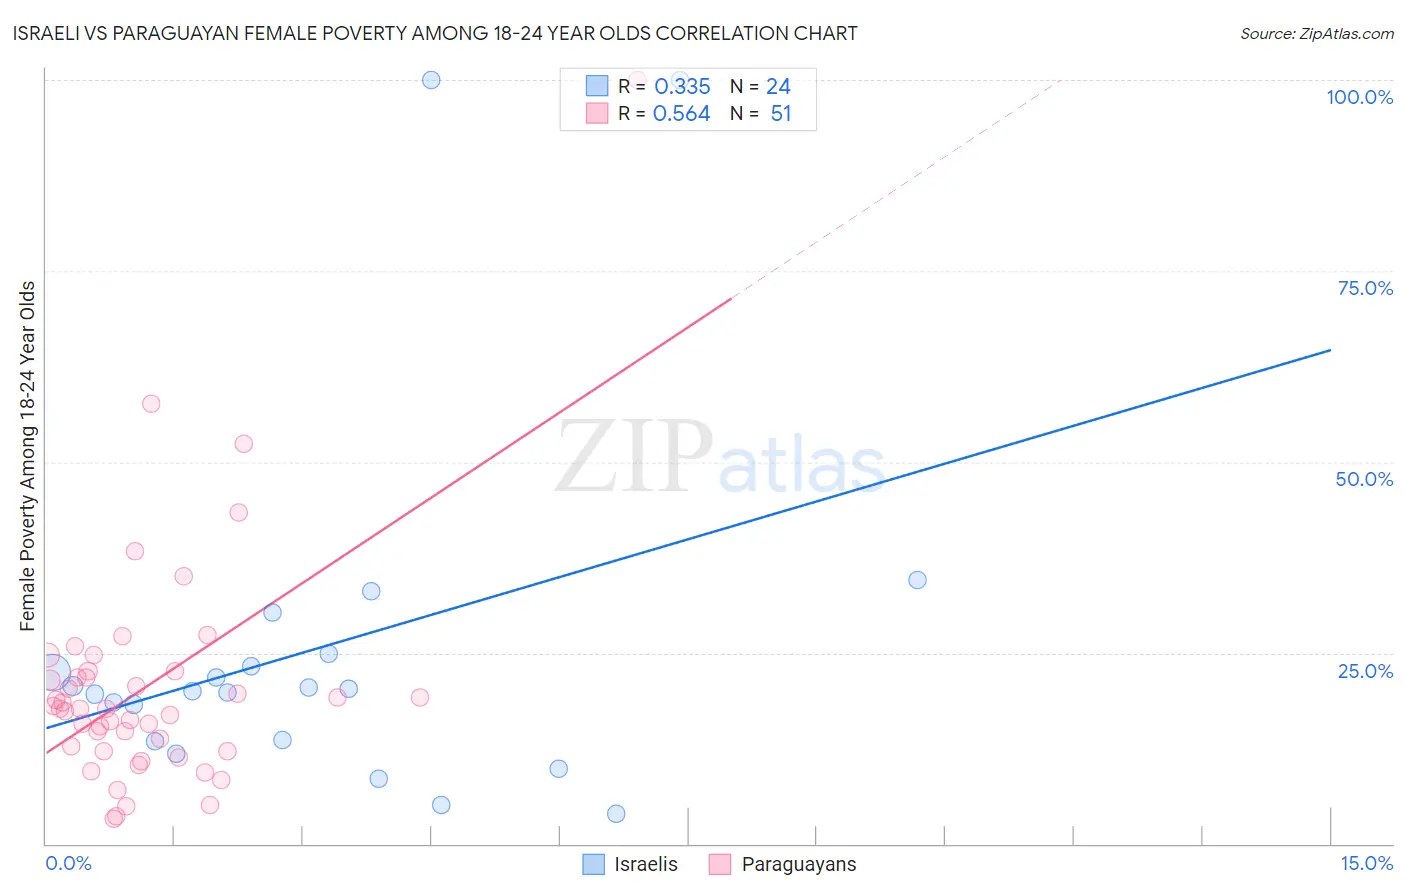 Israeli vs Paraguayan Female Poverty Among 18-24 Year Olds